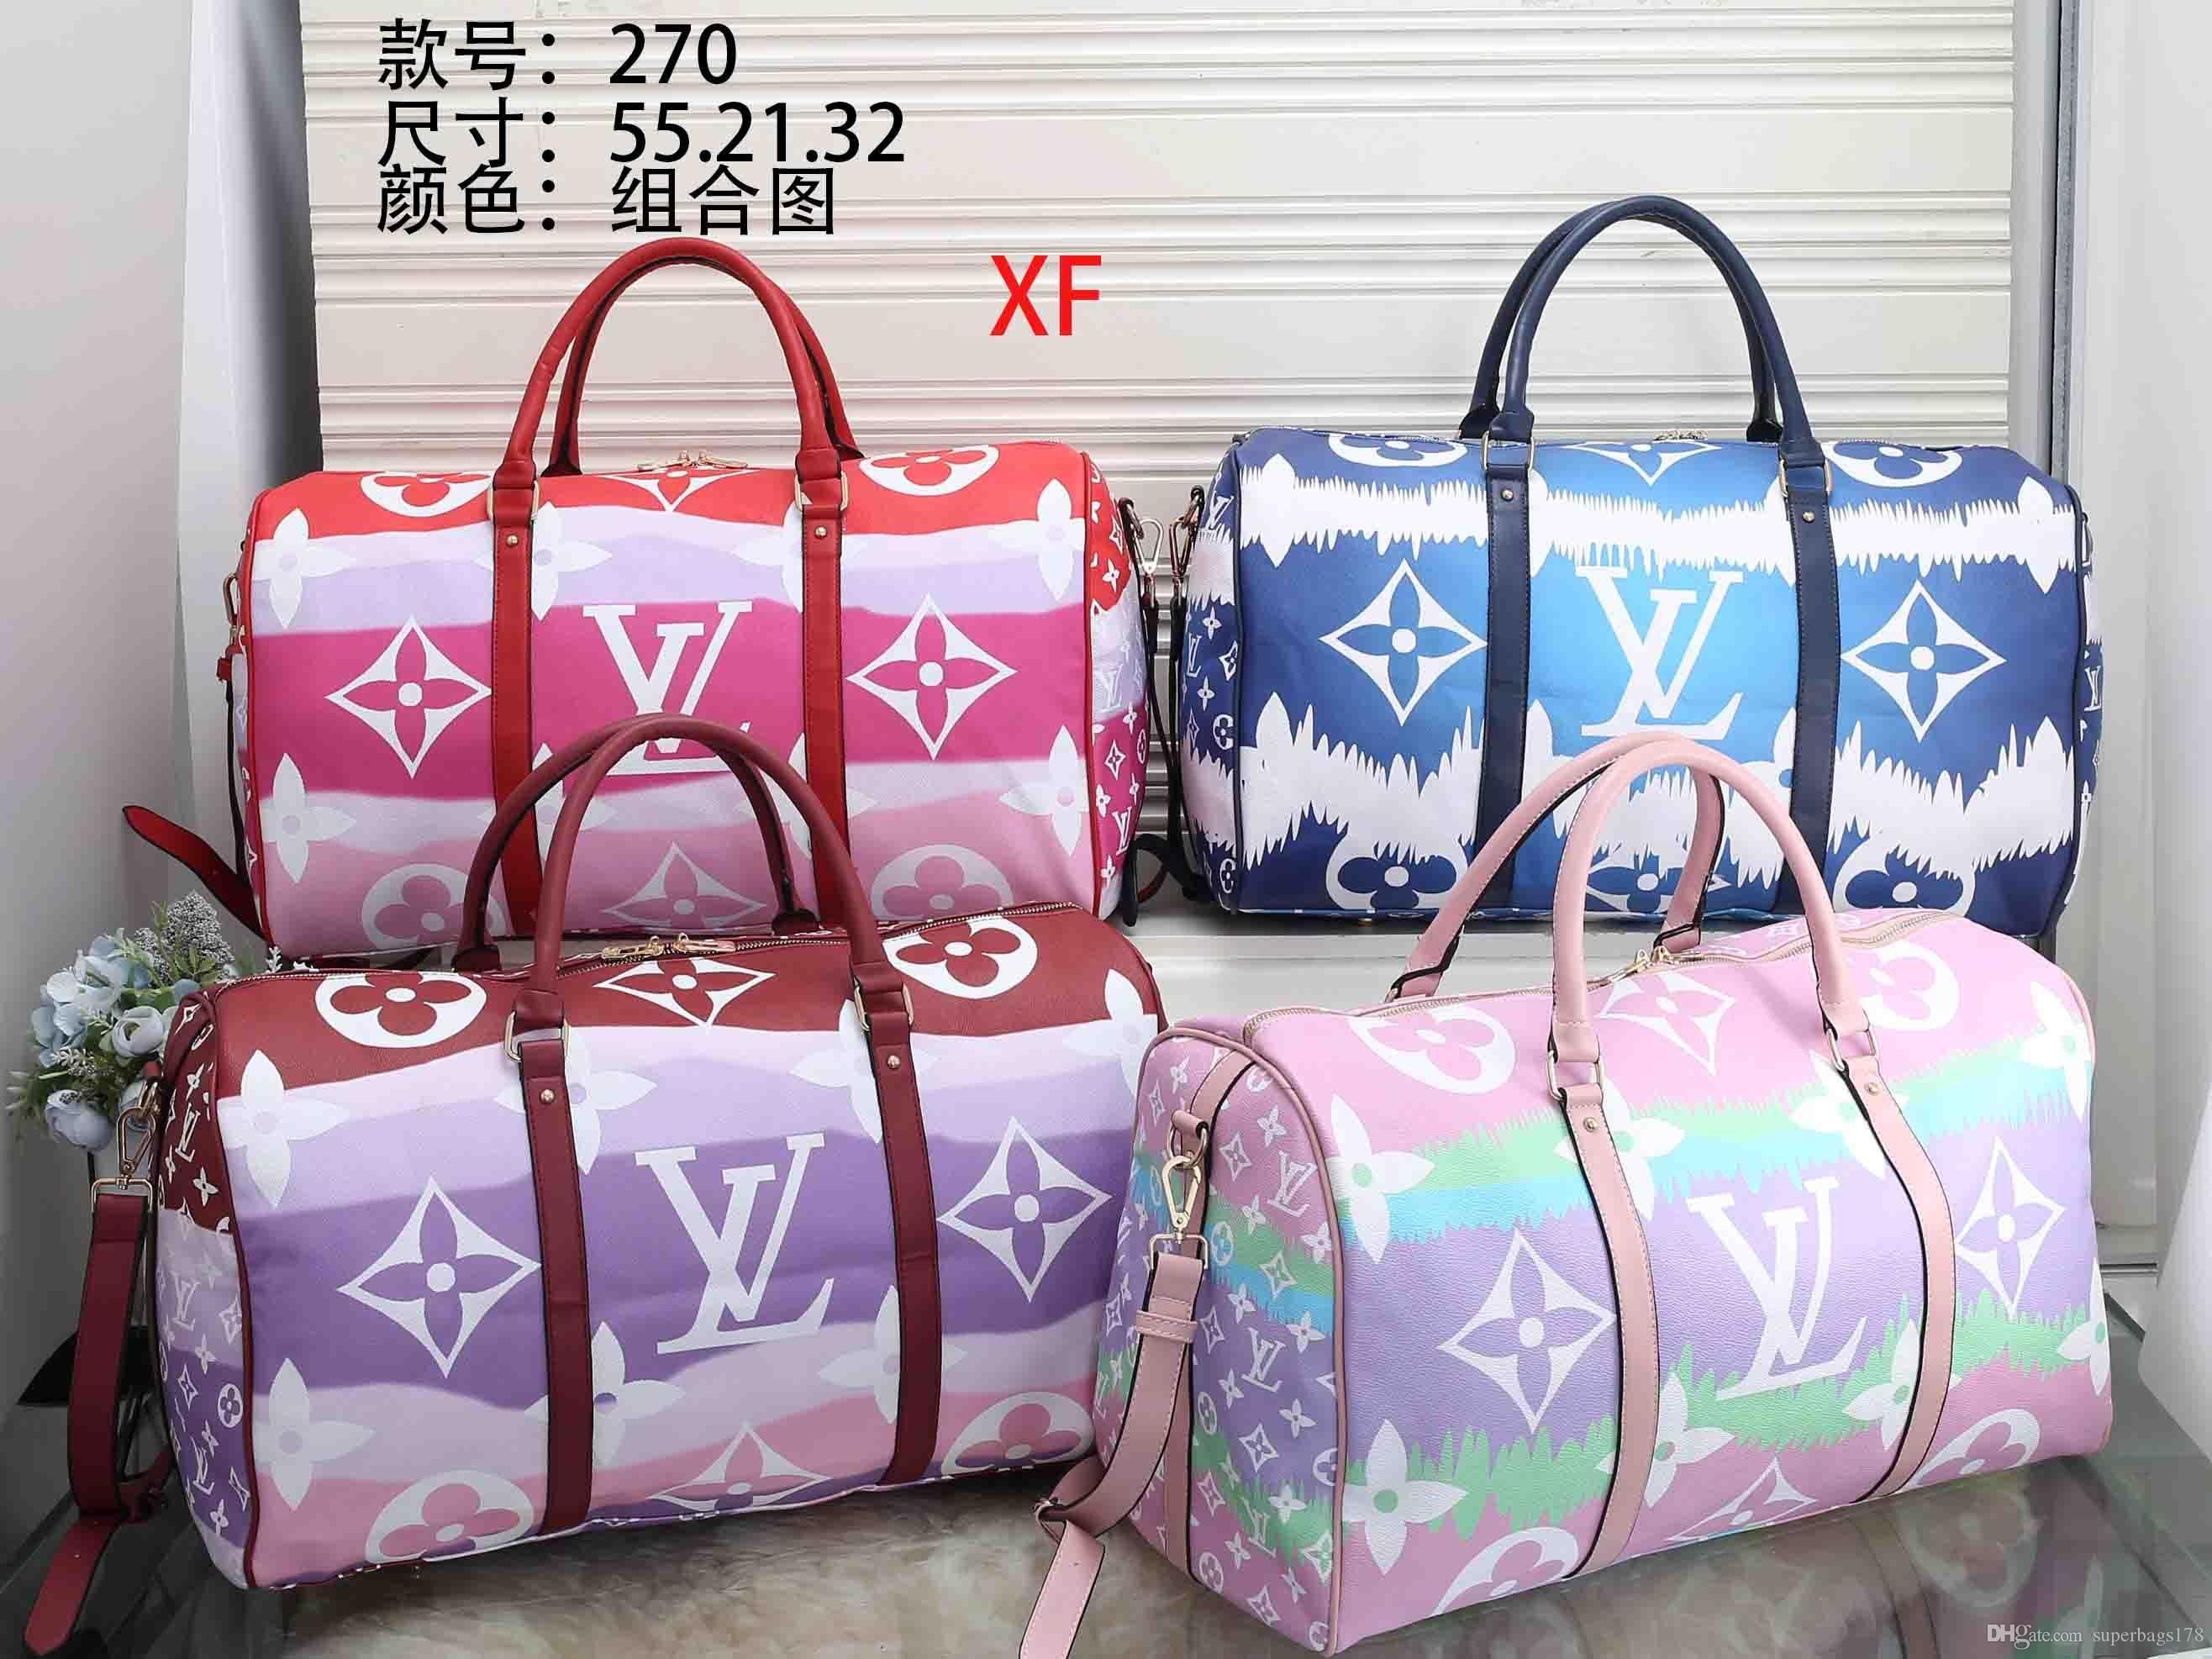 BBB XF 270 Best Price High Quality Women Ladies Single Handbag Tote Shoulder Backpack Bag Purse ...